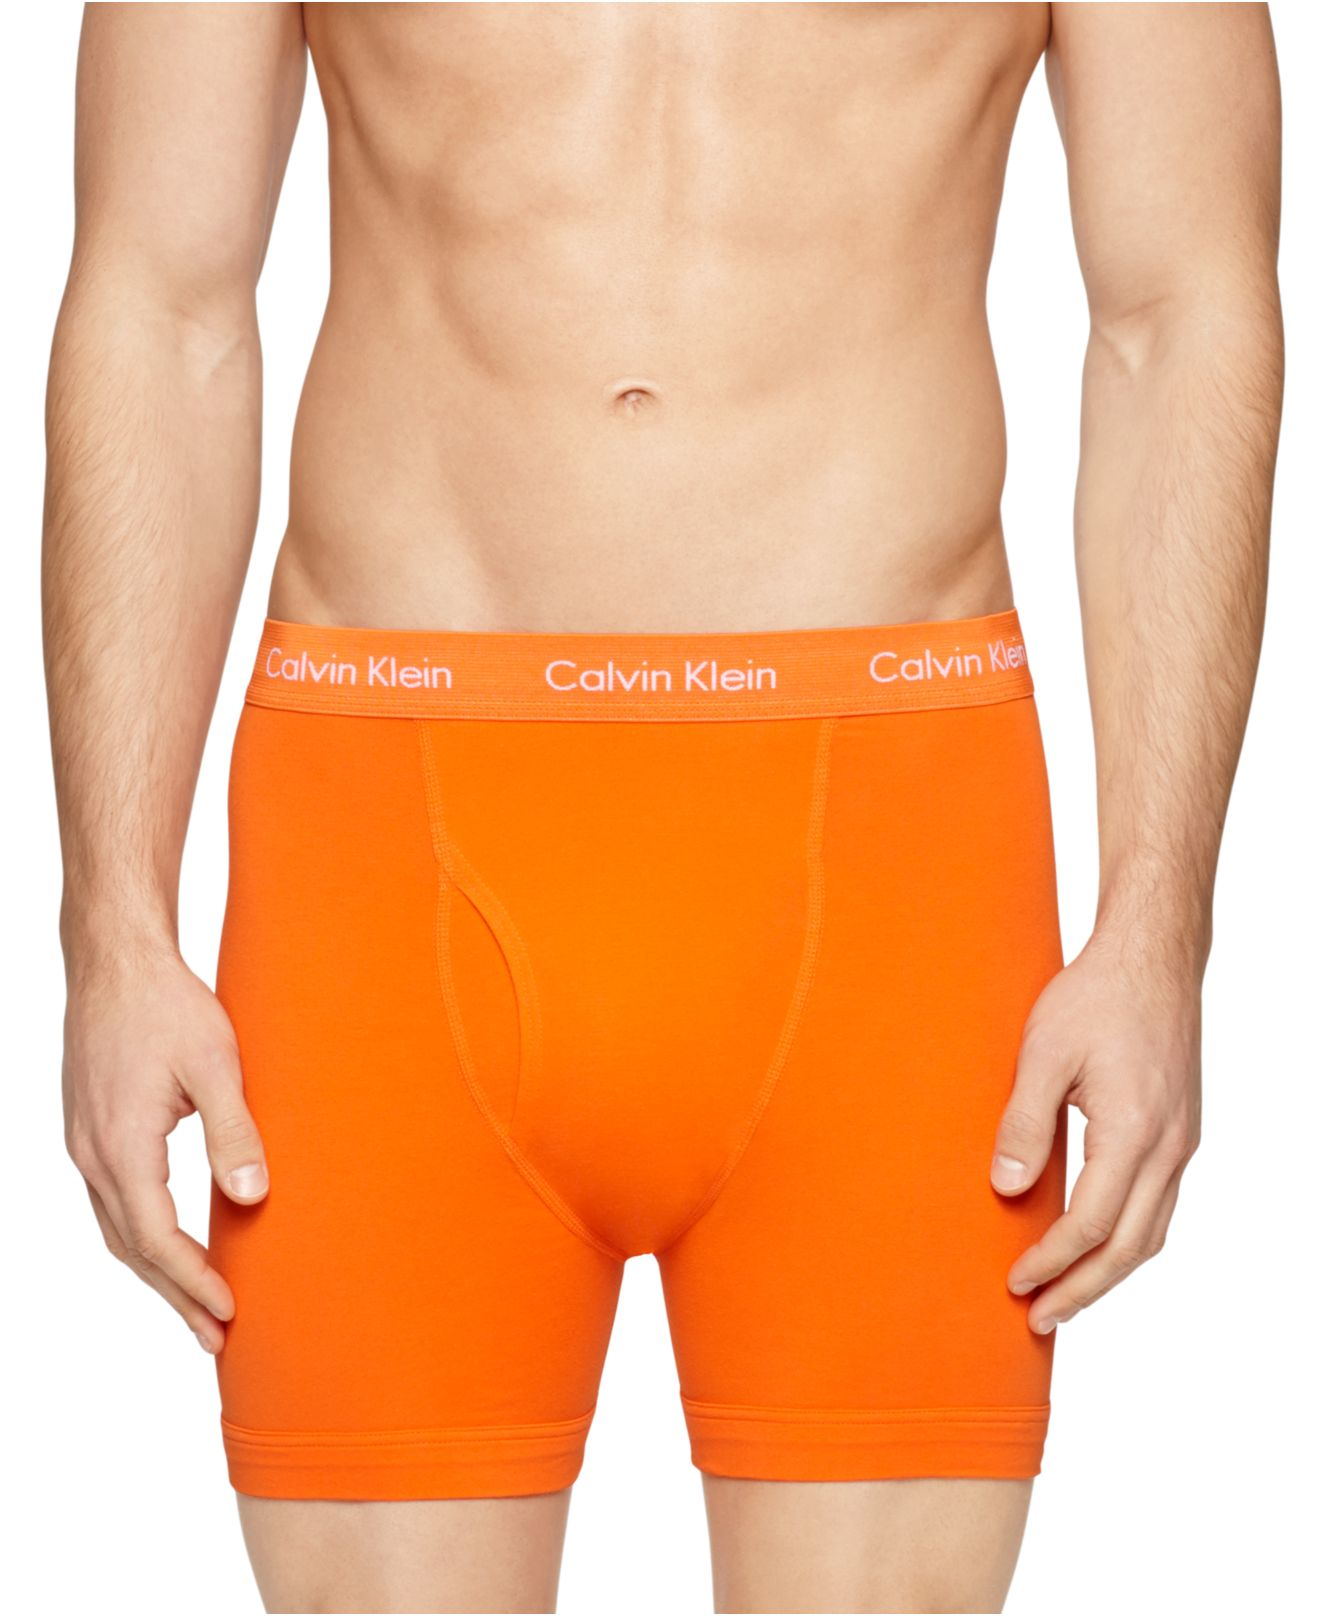 Calvin Klein Men'S Cotton Stretch Boxer Briefs 3-Pack for Men - Lyst